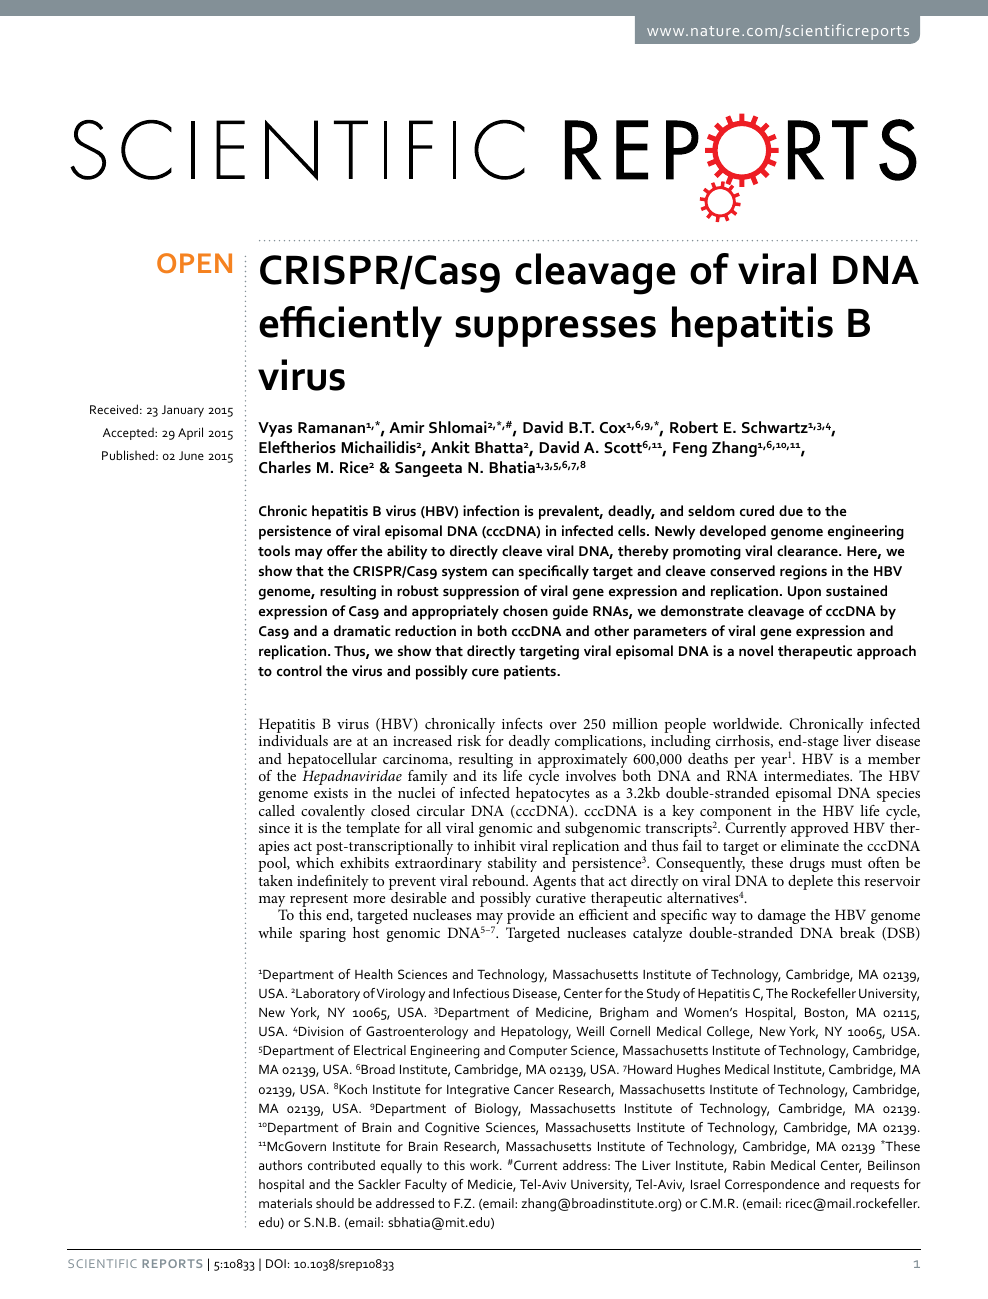 Crispr Cas9 Cleavage Of Viral Dna Efficiently Suppresses Hepatitis